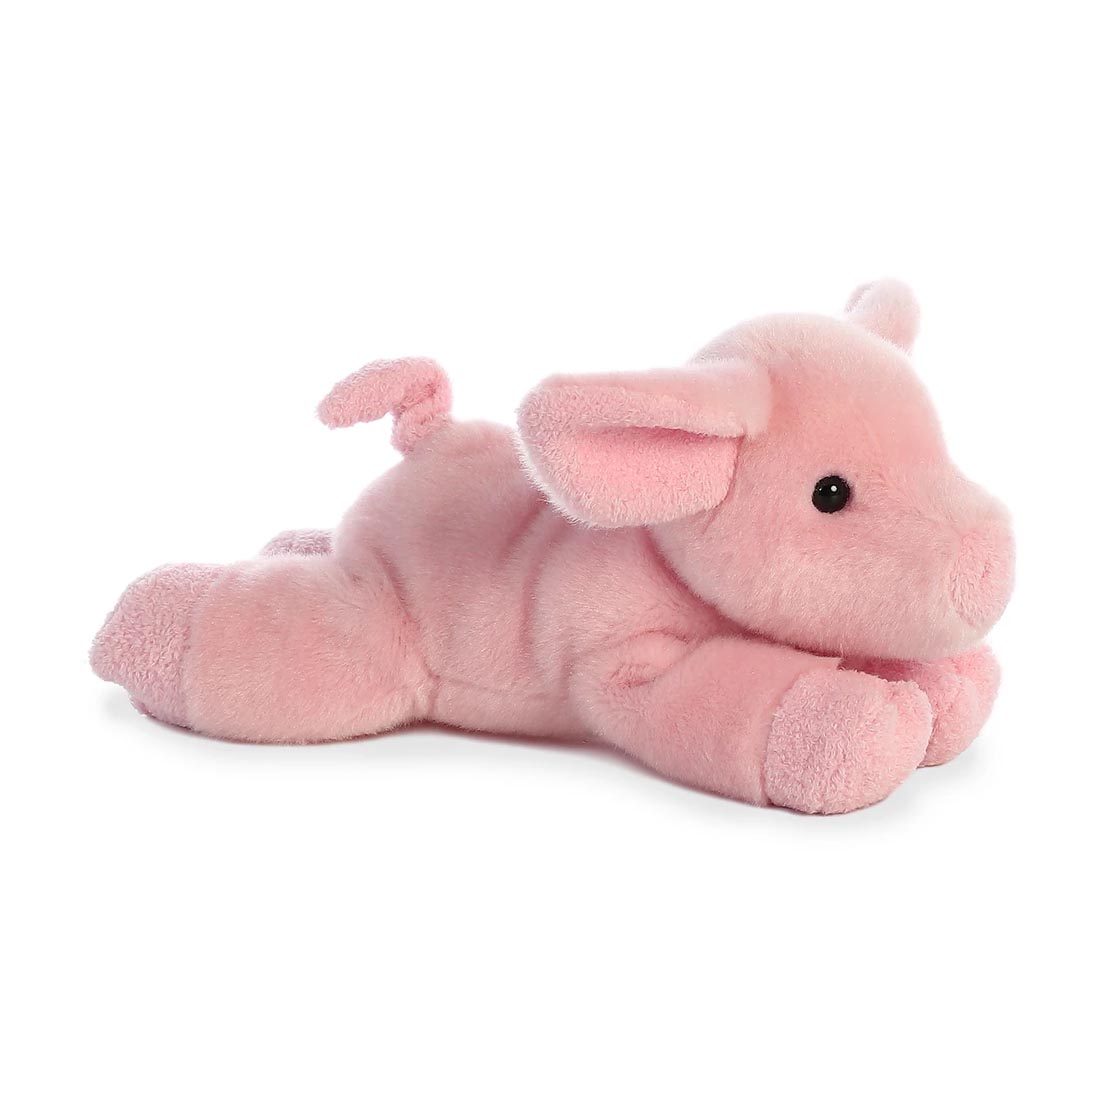 pink pig stuffed animal